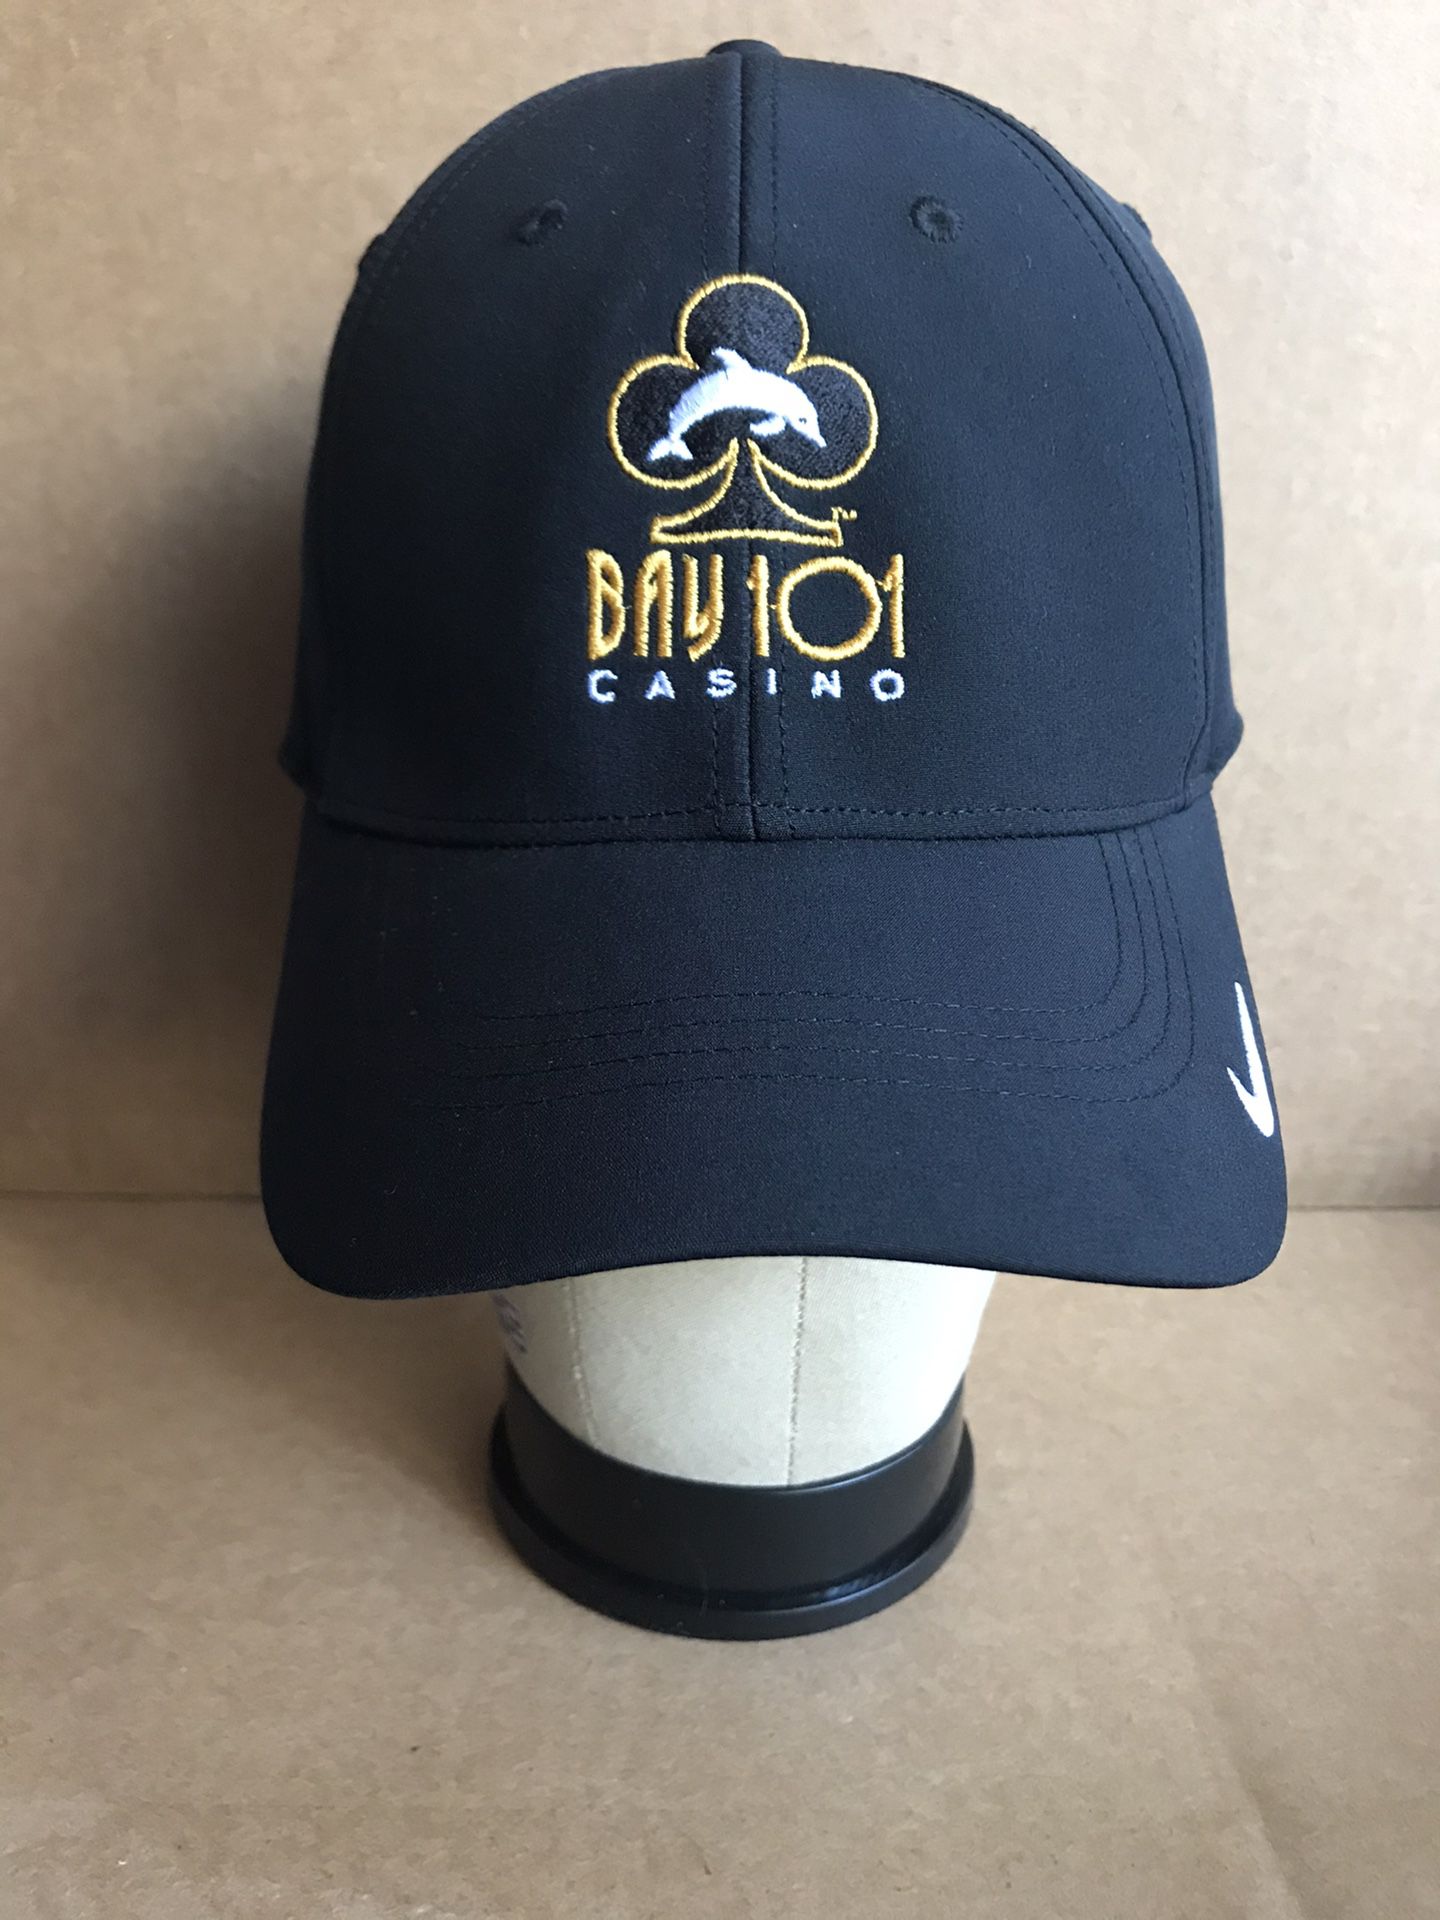 NWT Bay 101 Casino Grand Opening 2017 Nike Golf Black Strap Back Cap Hat